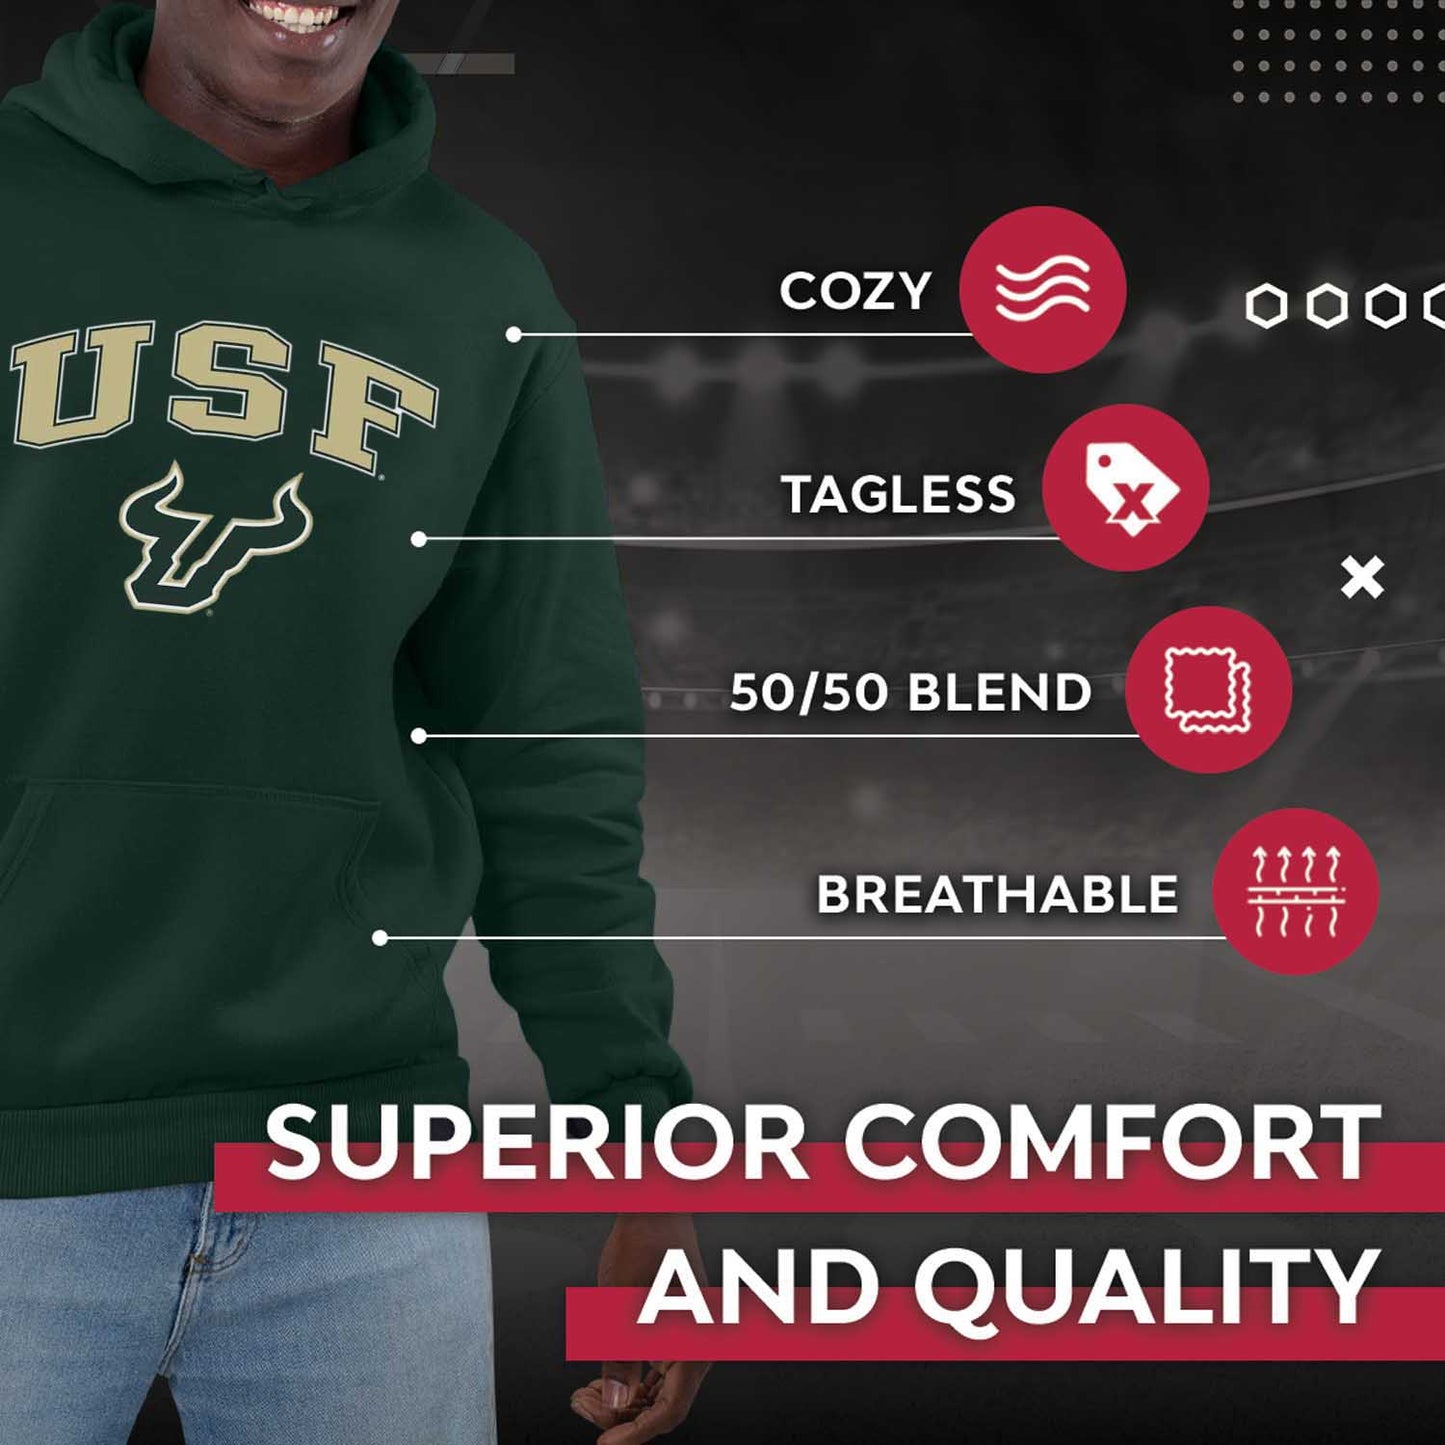 USF Bulls Adult Arch & Logo Soft Style Gameday Hooded Sweatshirt - Green